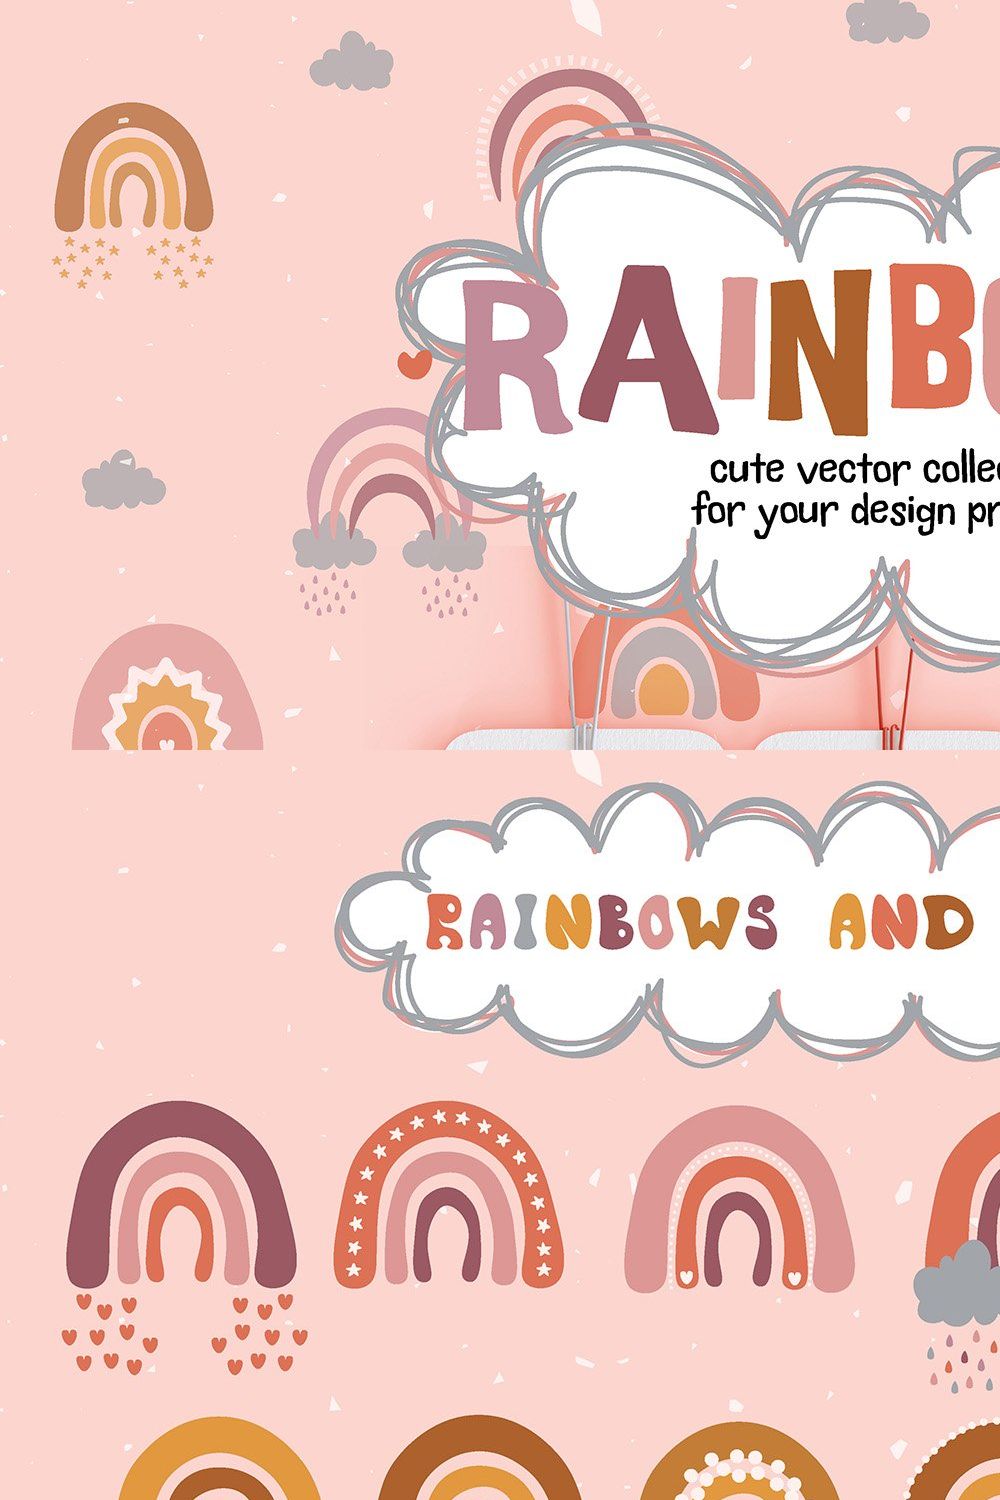 Rainbows pinterest preview image.